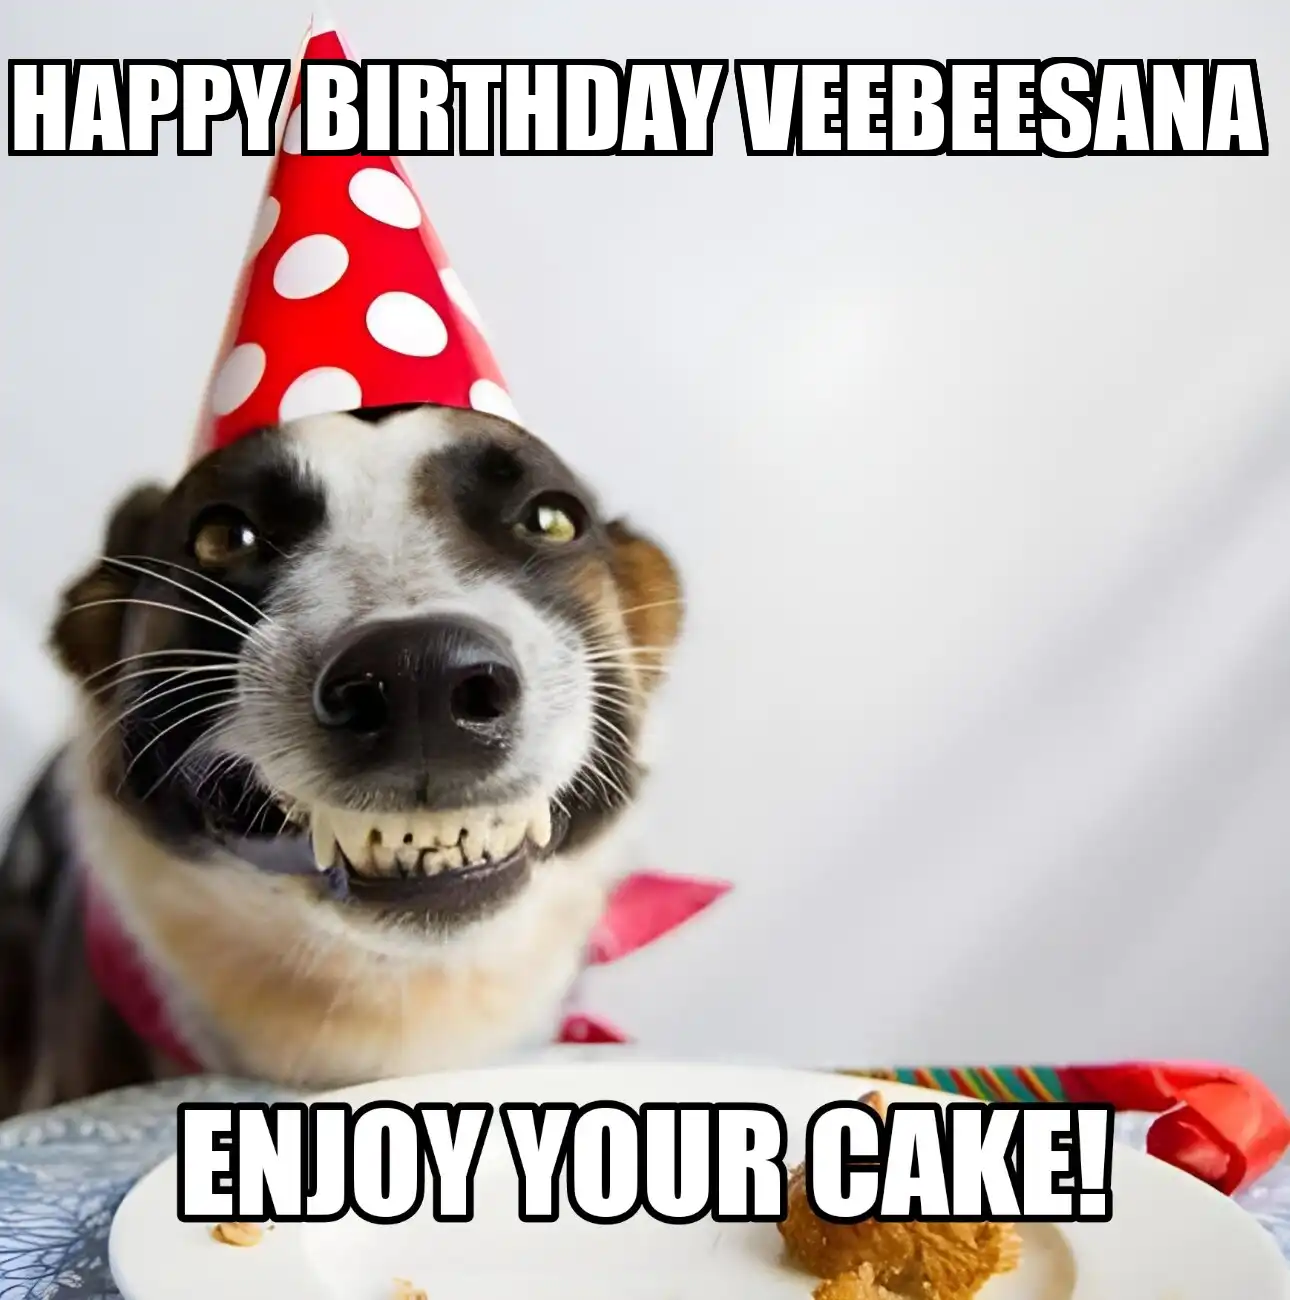 Happy Birthday Veebeesana Enjoy Your Cake Dog Meme